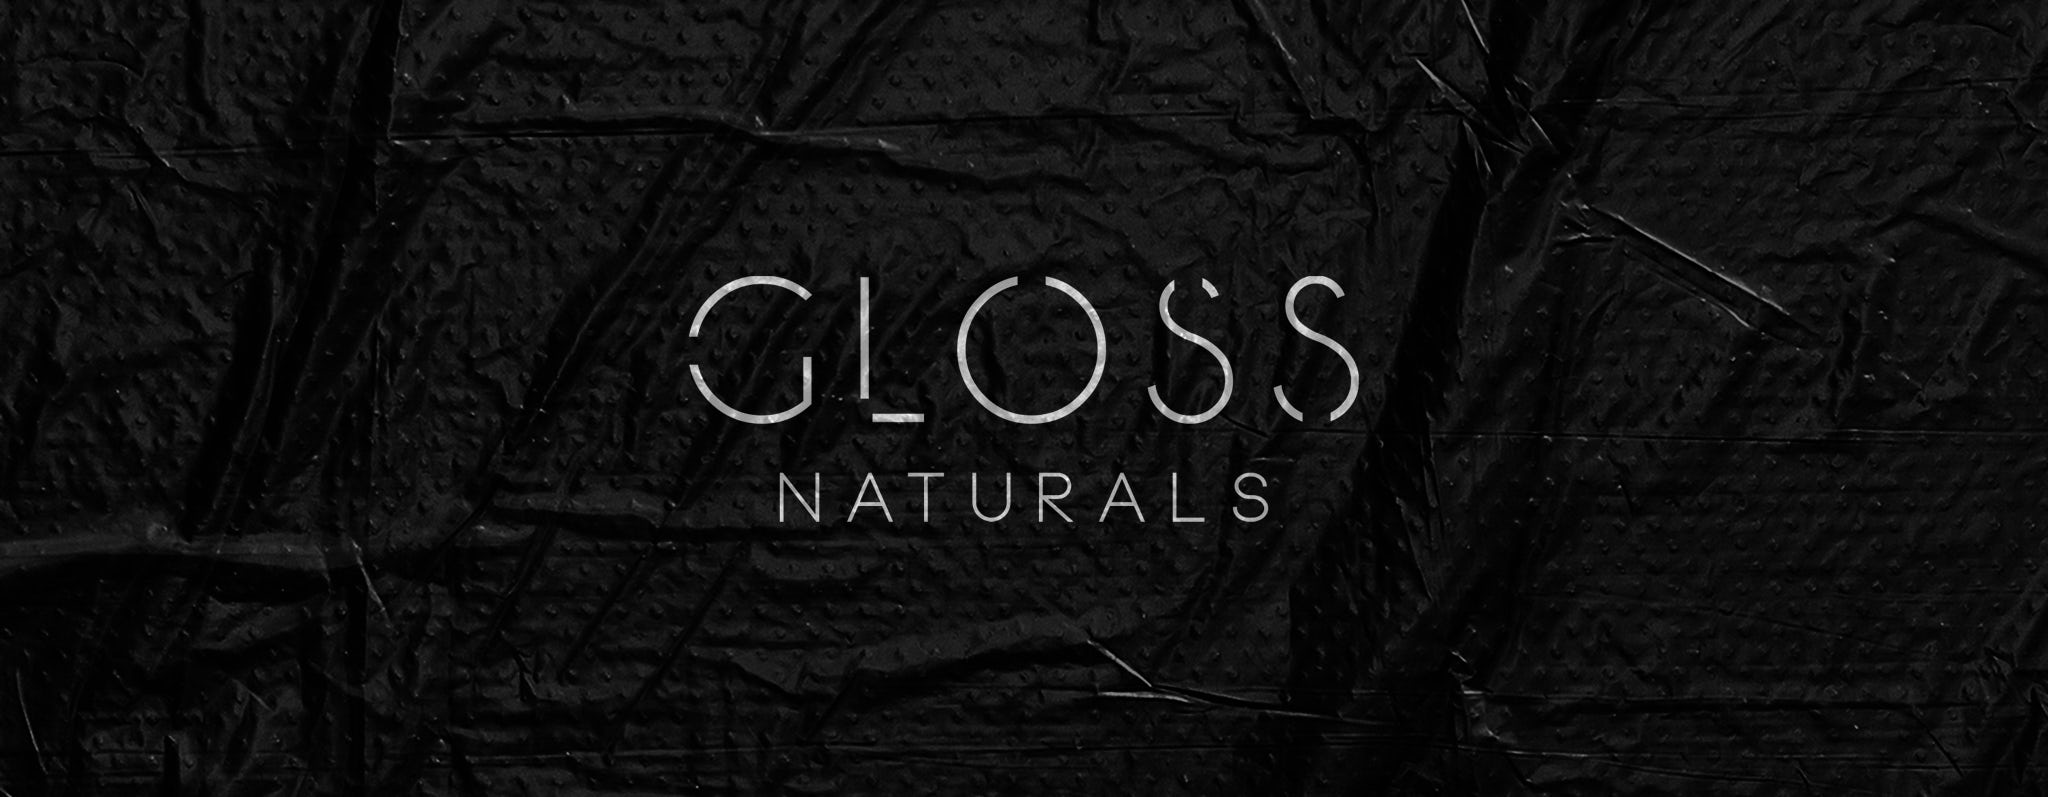 deep-sleep-studio-gloss-naturals-logo-miami